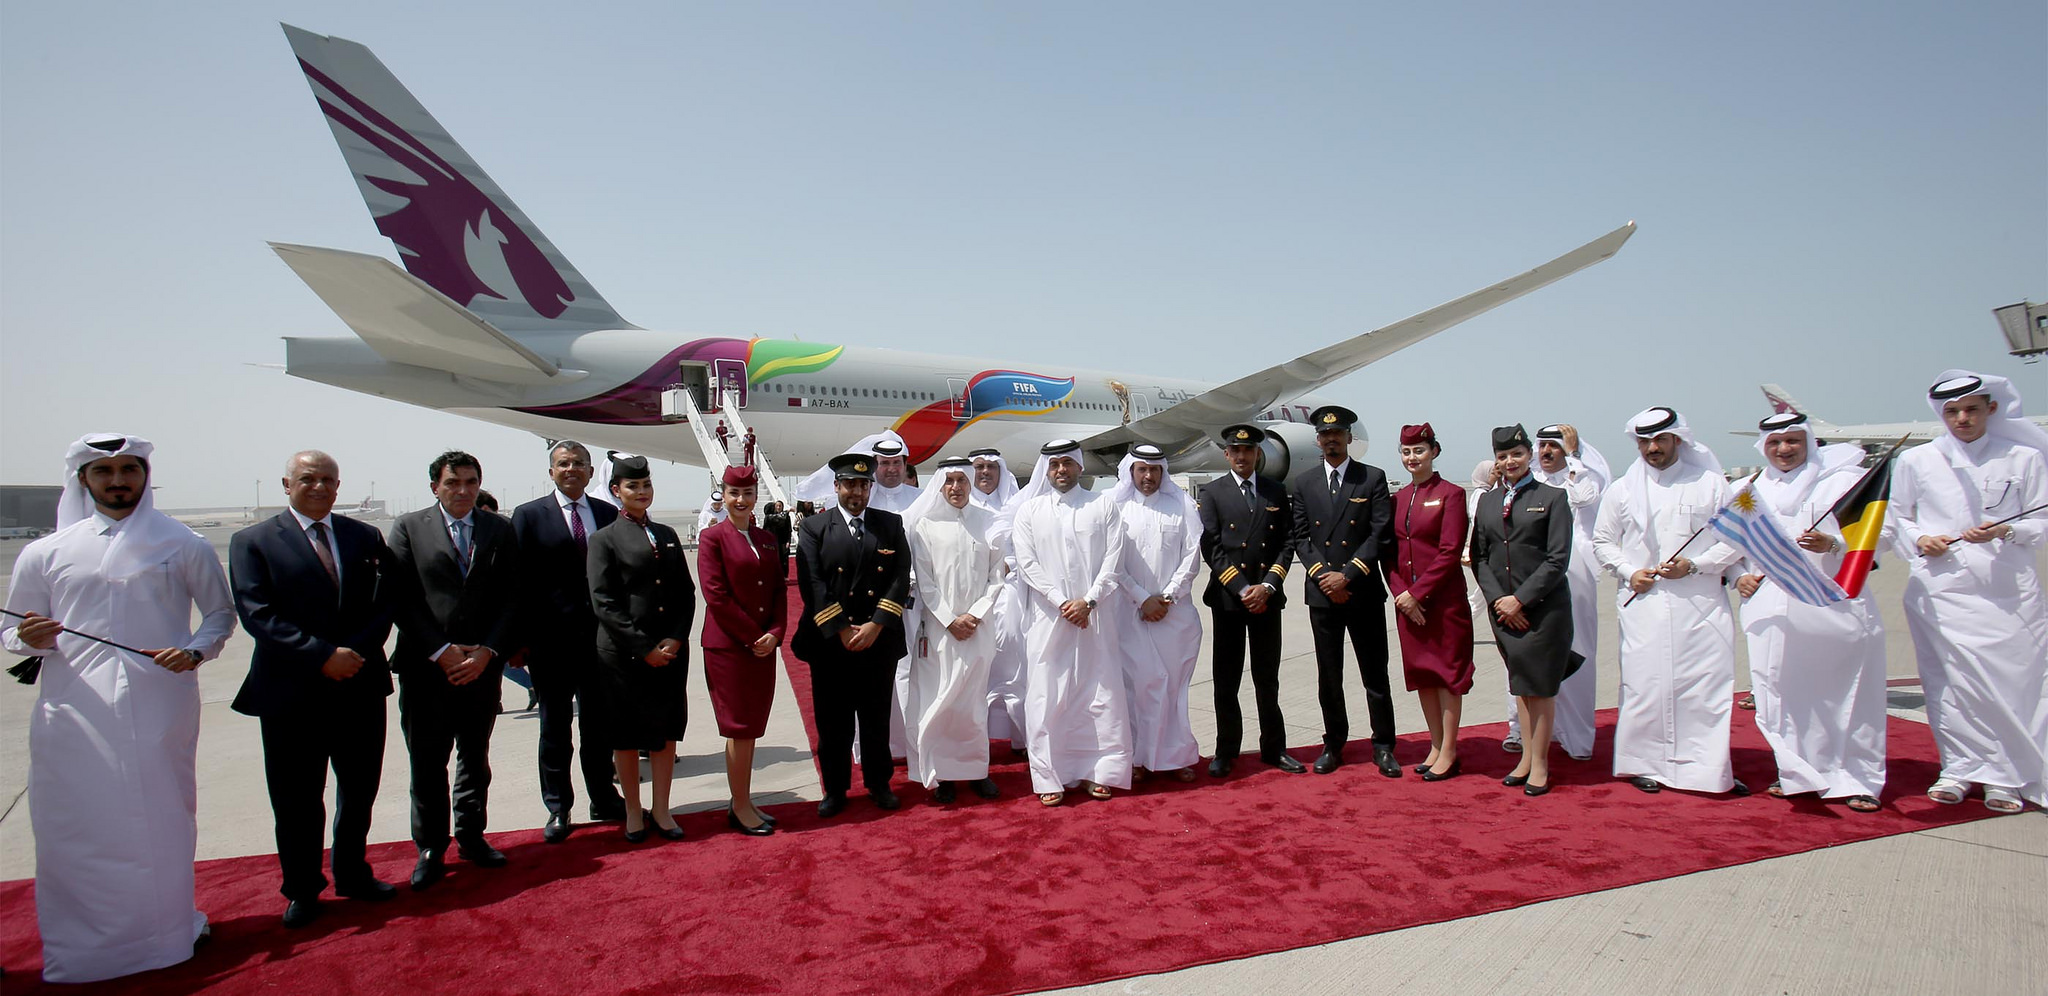 Qatar Airways launches FIFA-branded Aircraft